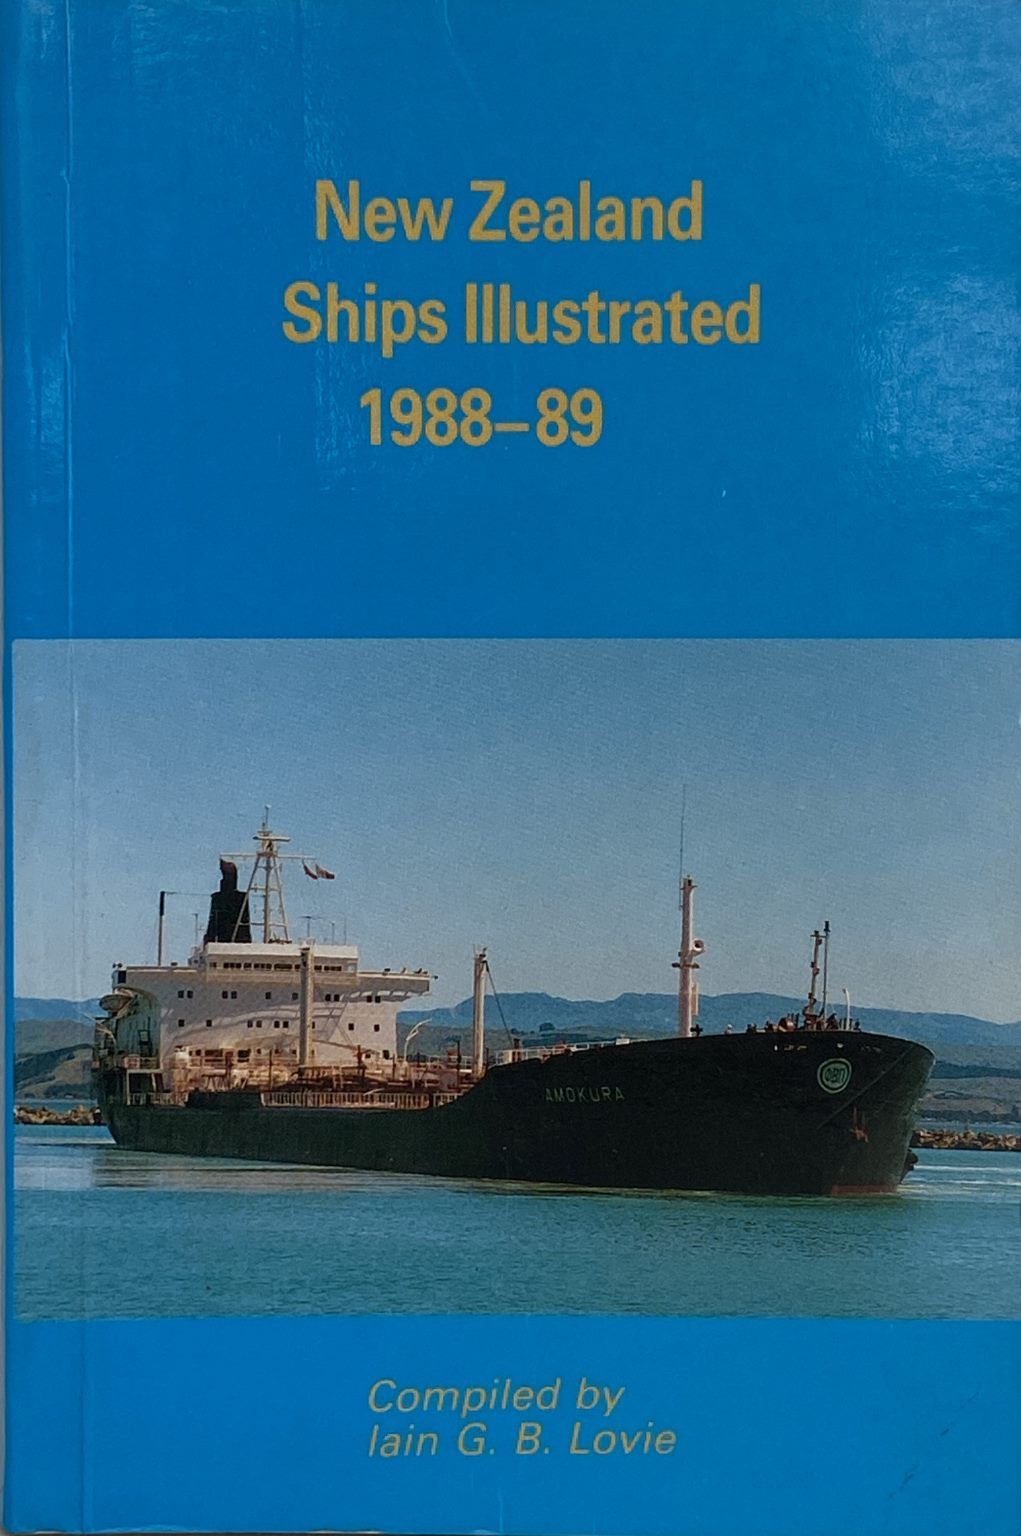 NEW ZEALAND SHIPS ILLUSTRATED 1988-89